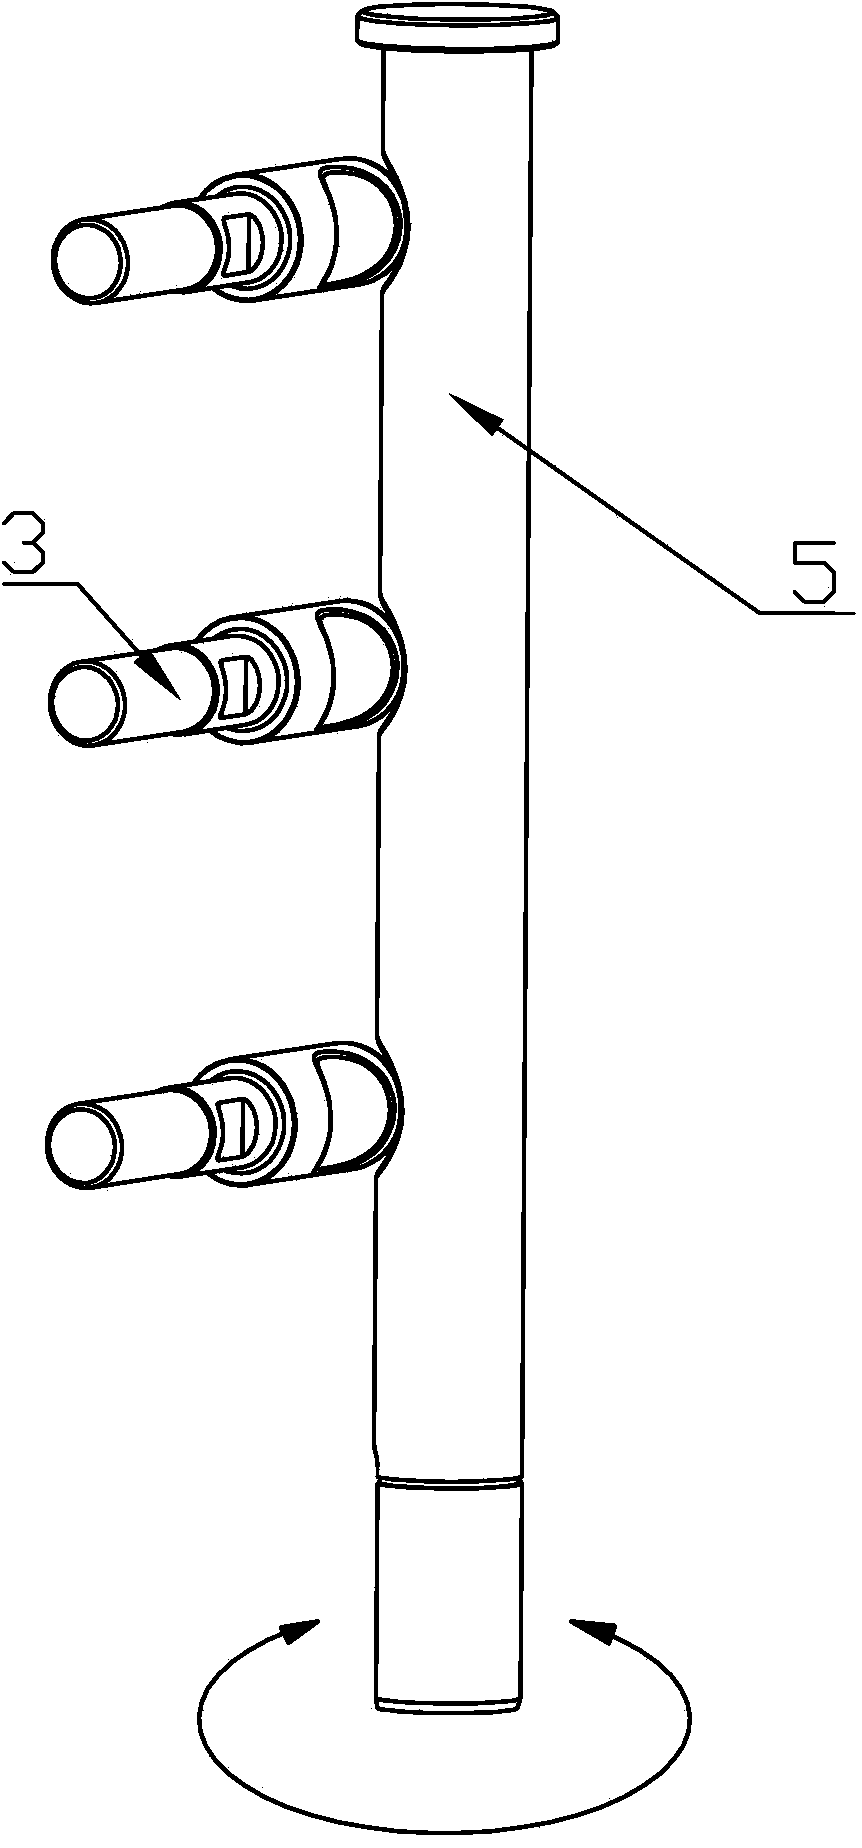 Rotation type mold locking mechanism